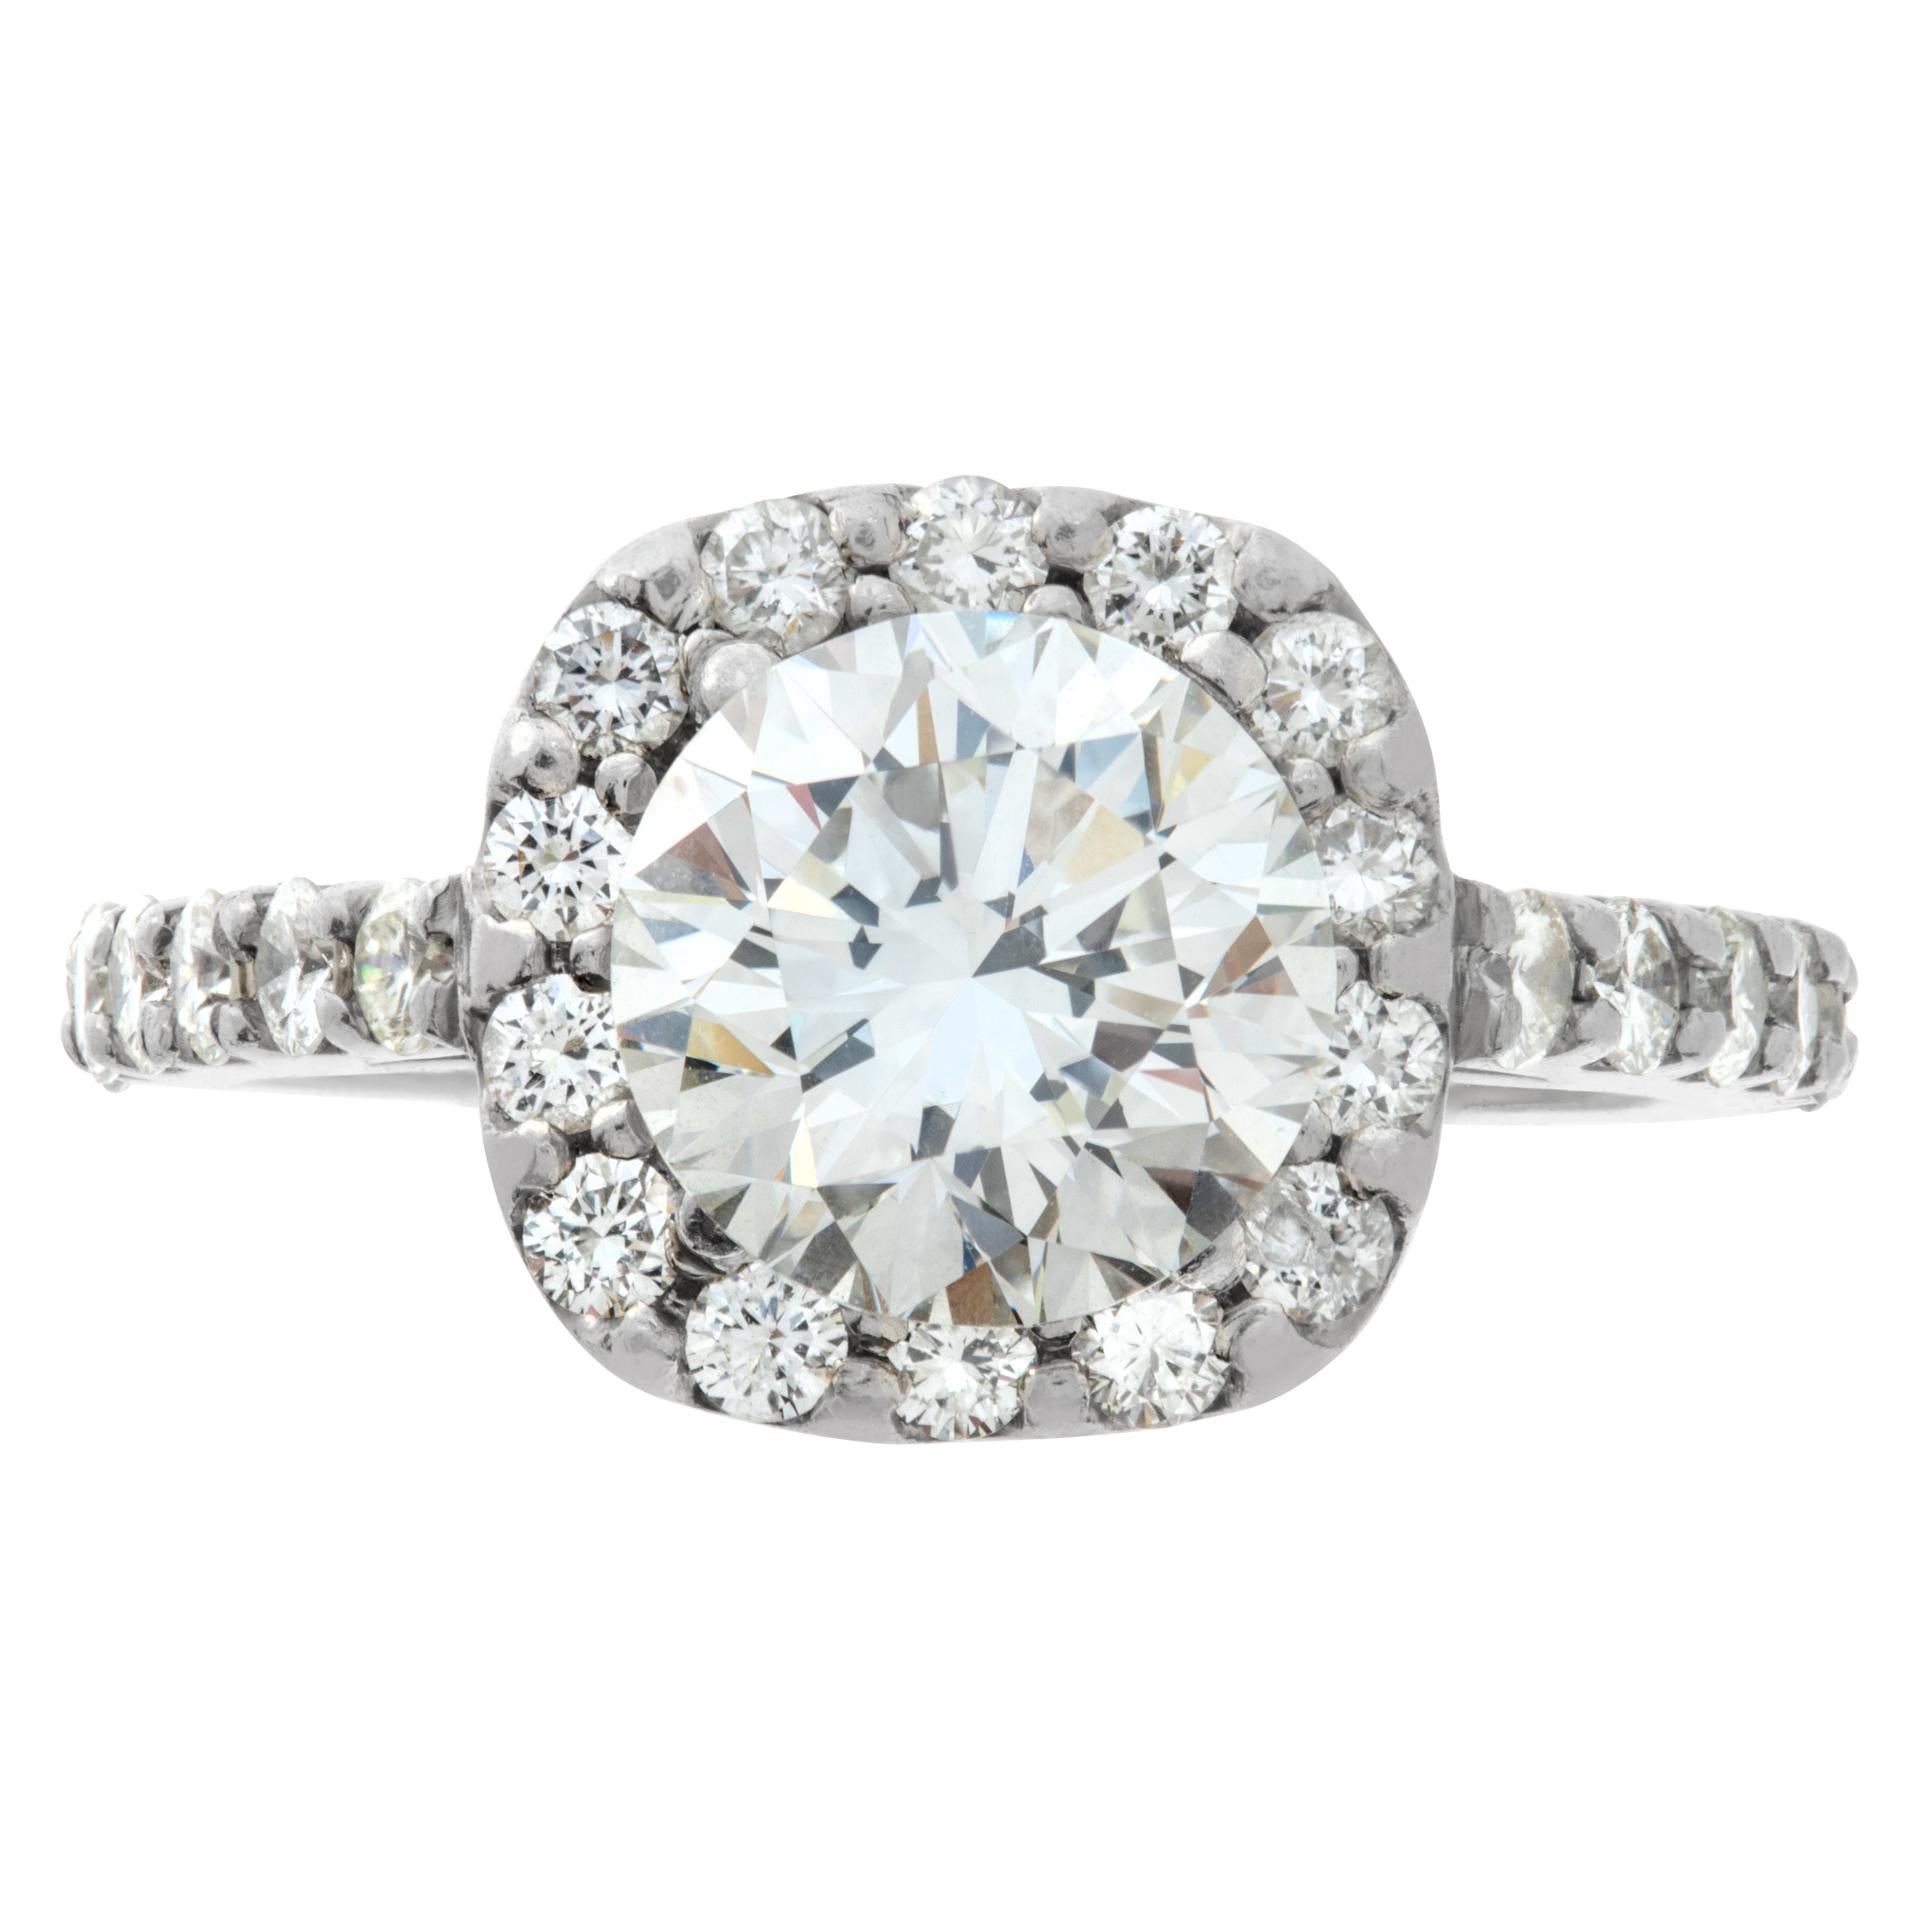 GIA certified round brilliant cut diamond 2.03 carat ( I color, SI1 clarity) ring set in platrinum 